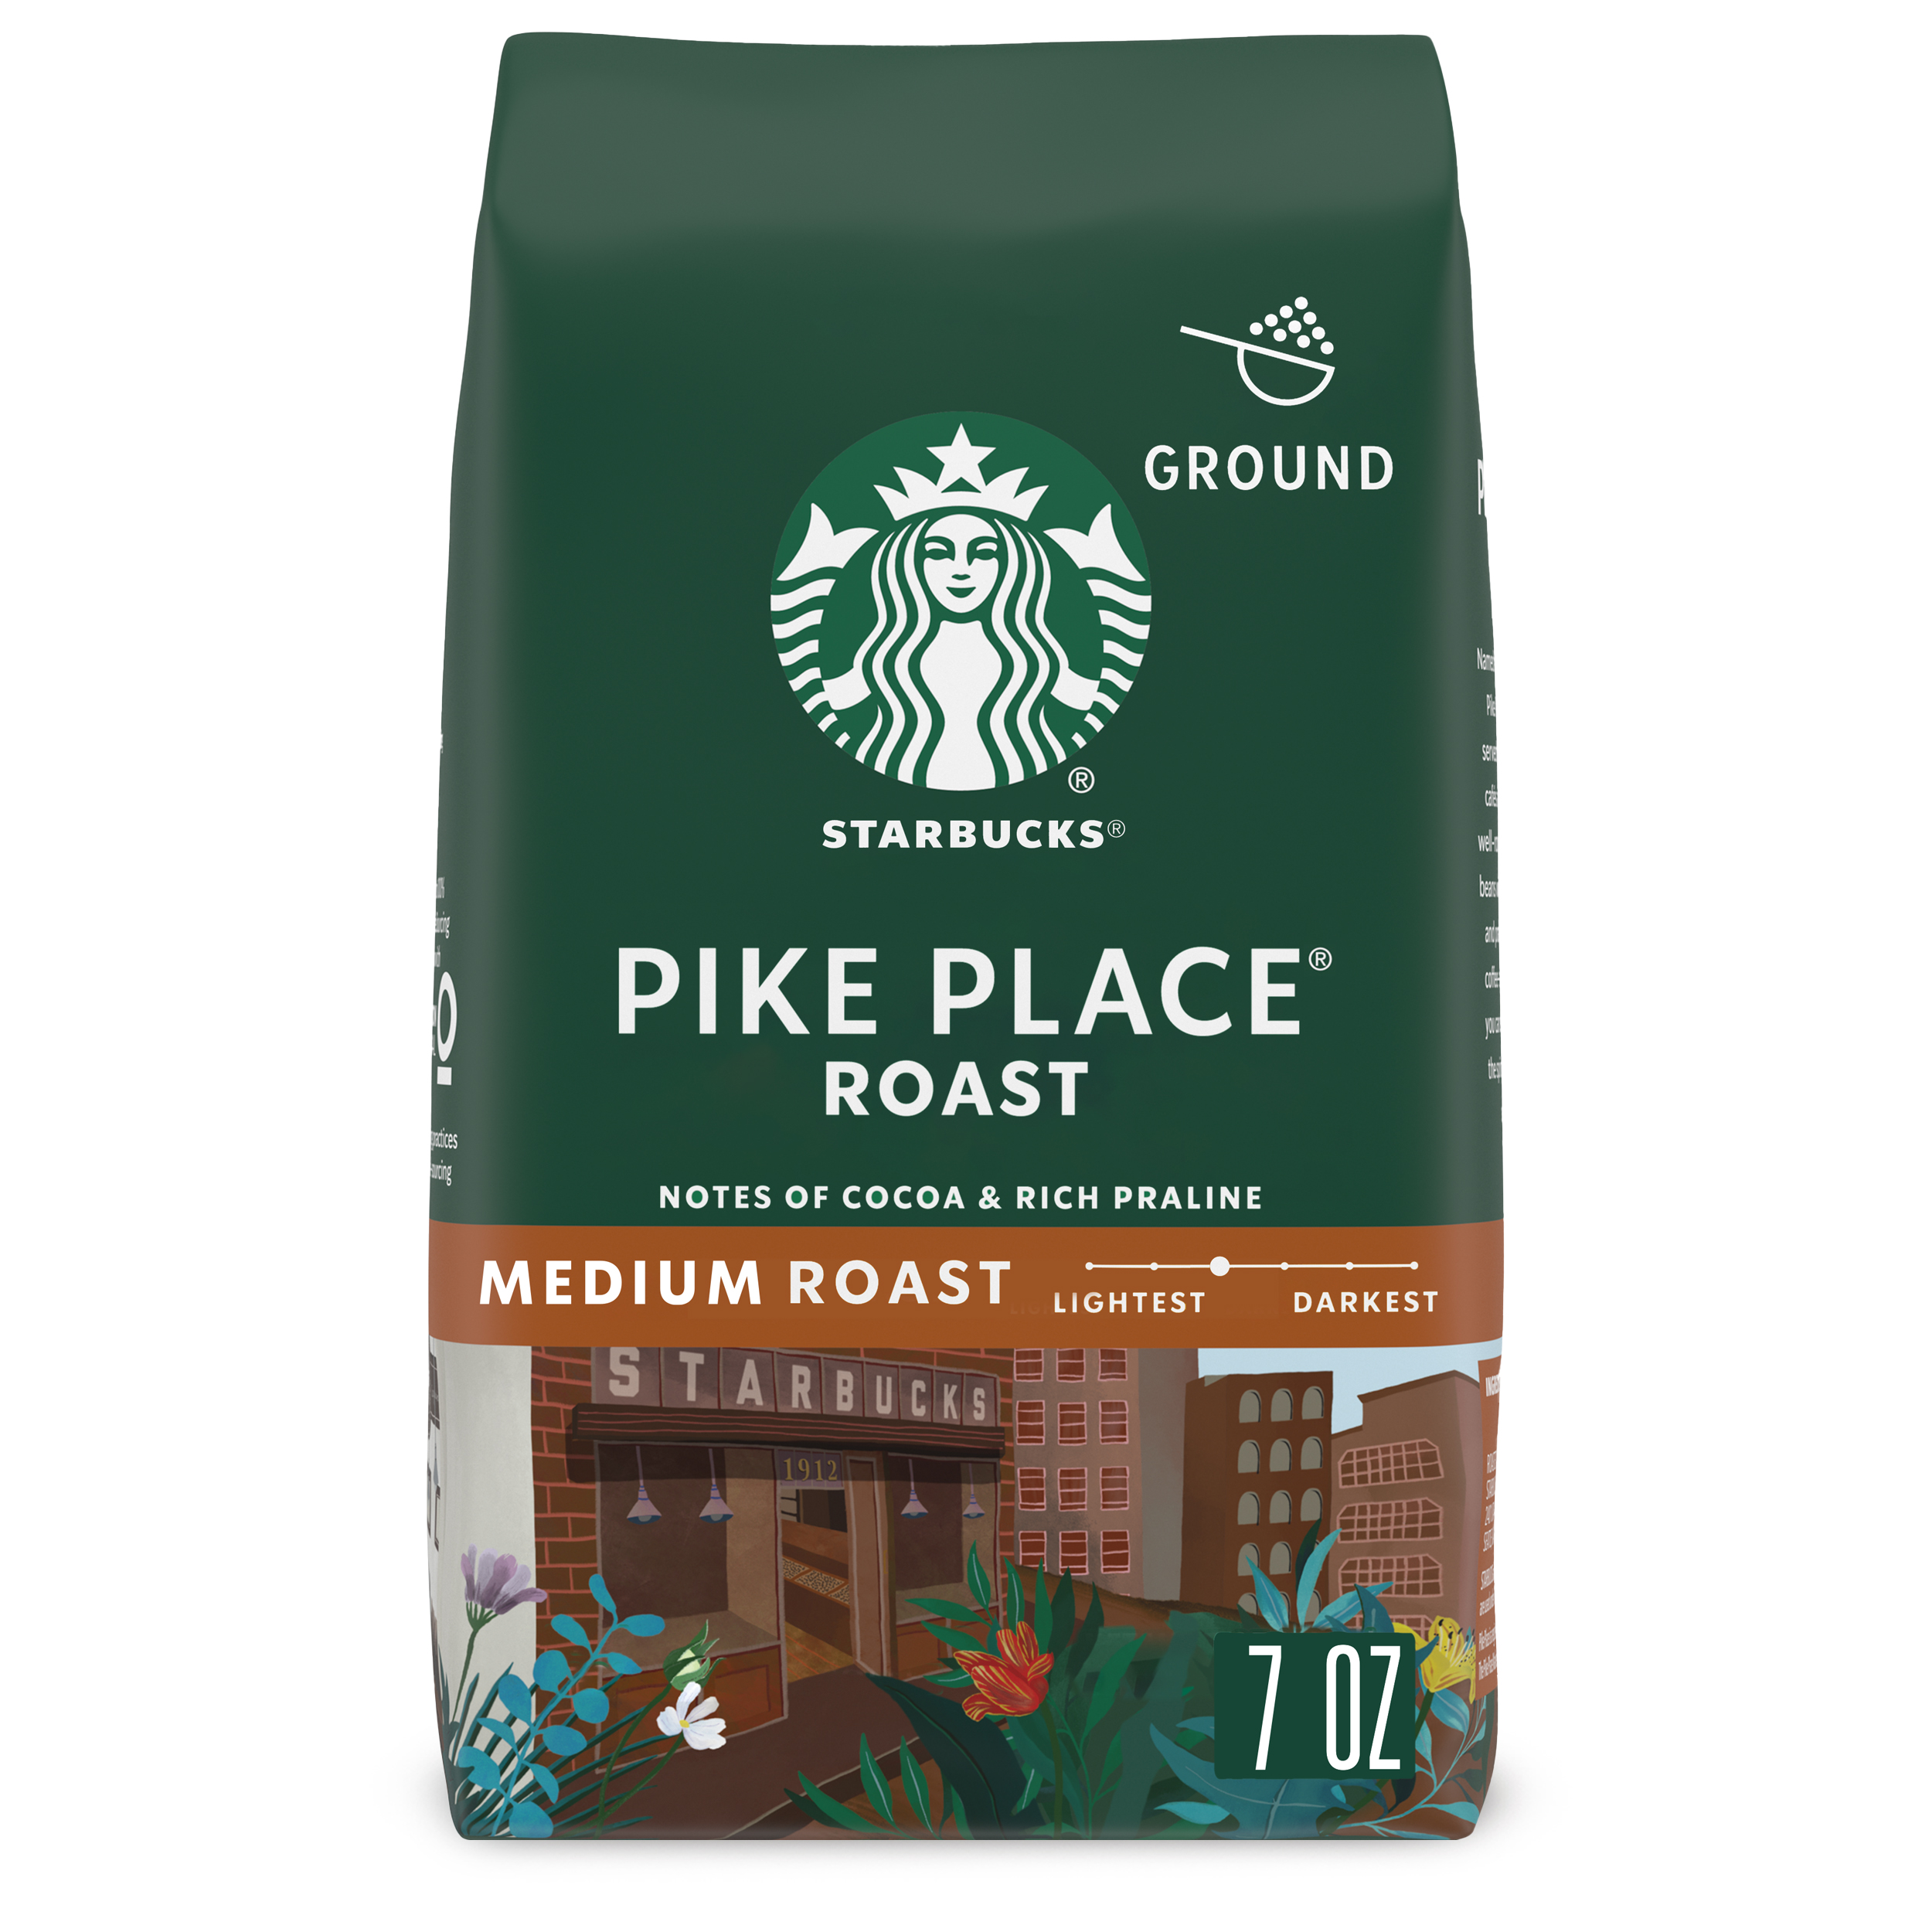 Starbucks Pike Place Roast, Ground Coffee, Medium Roast, 7 oz - image 1 of 8